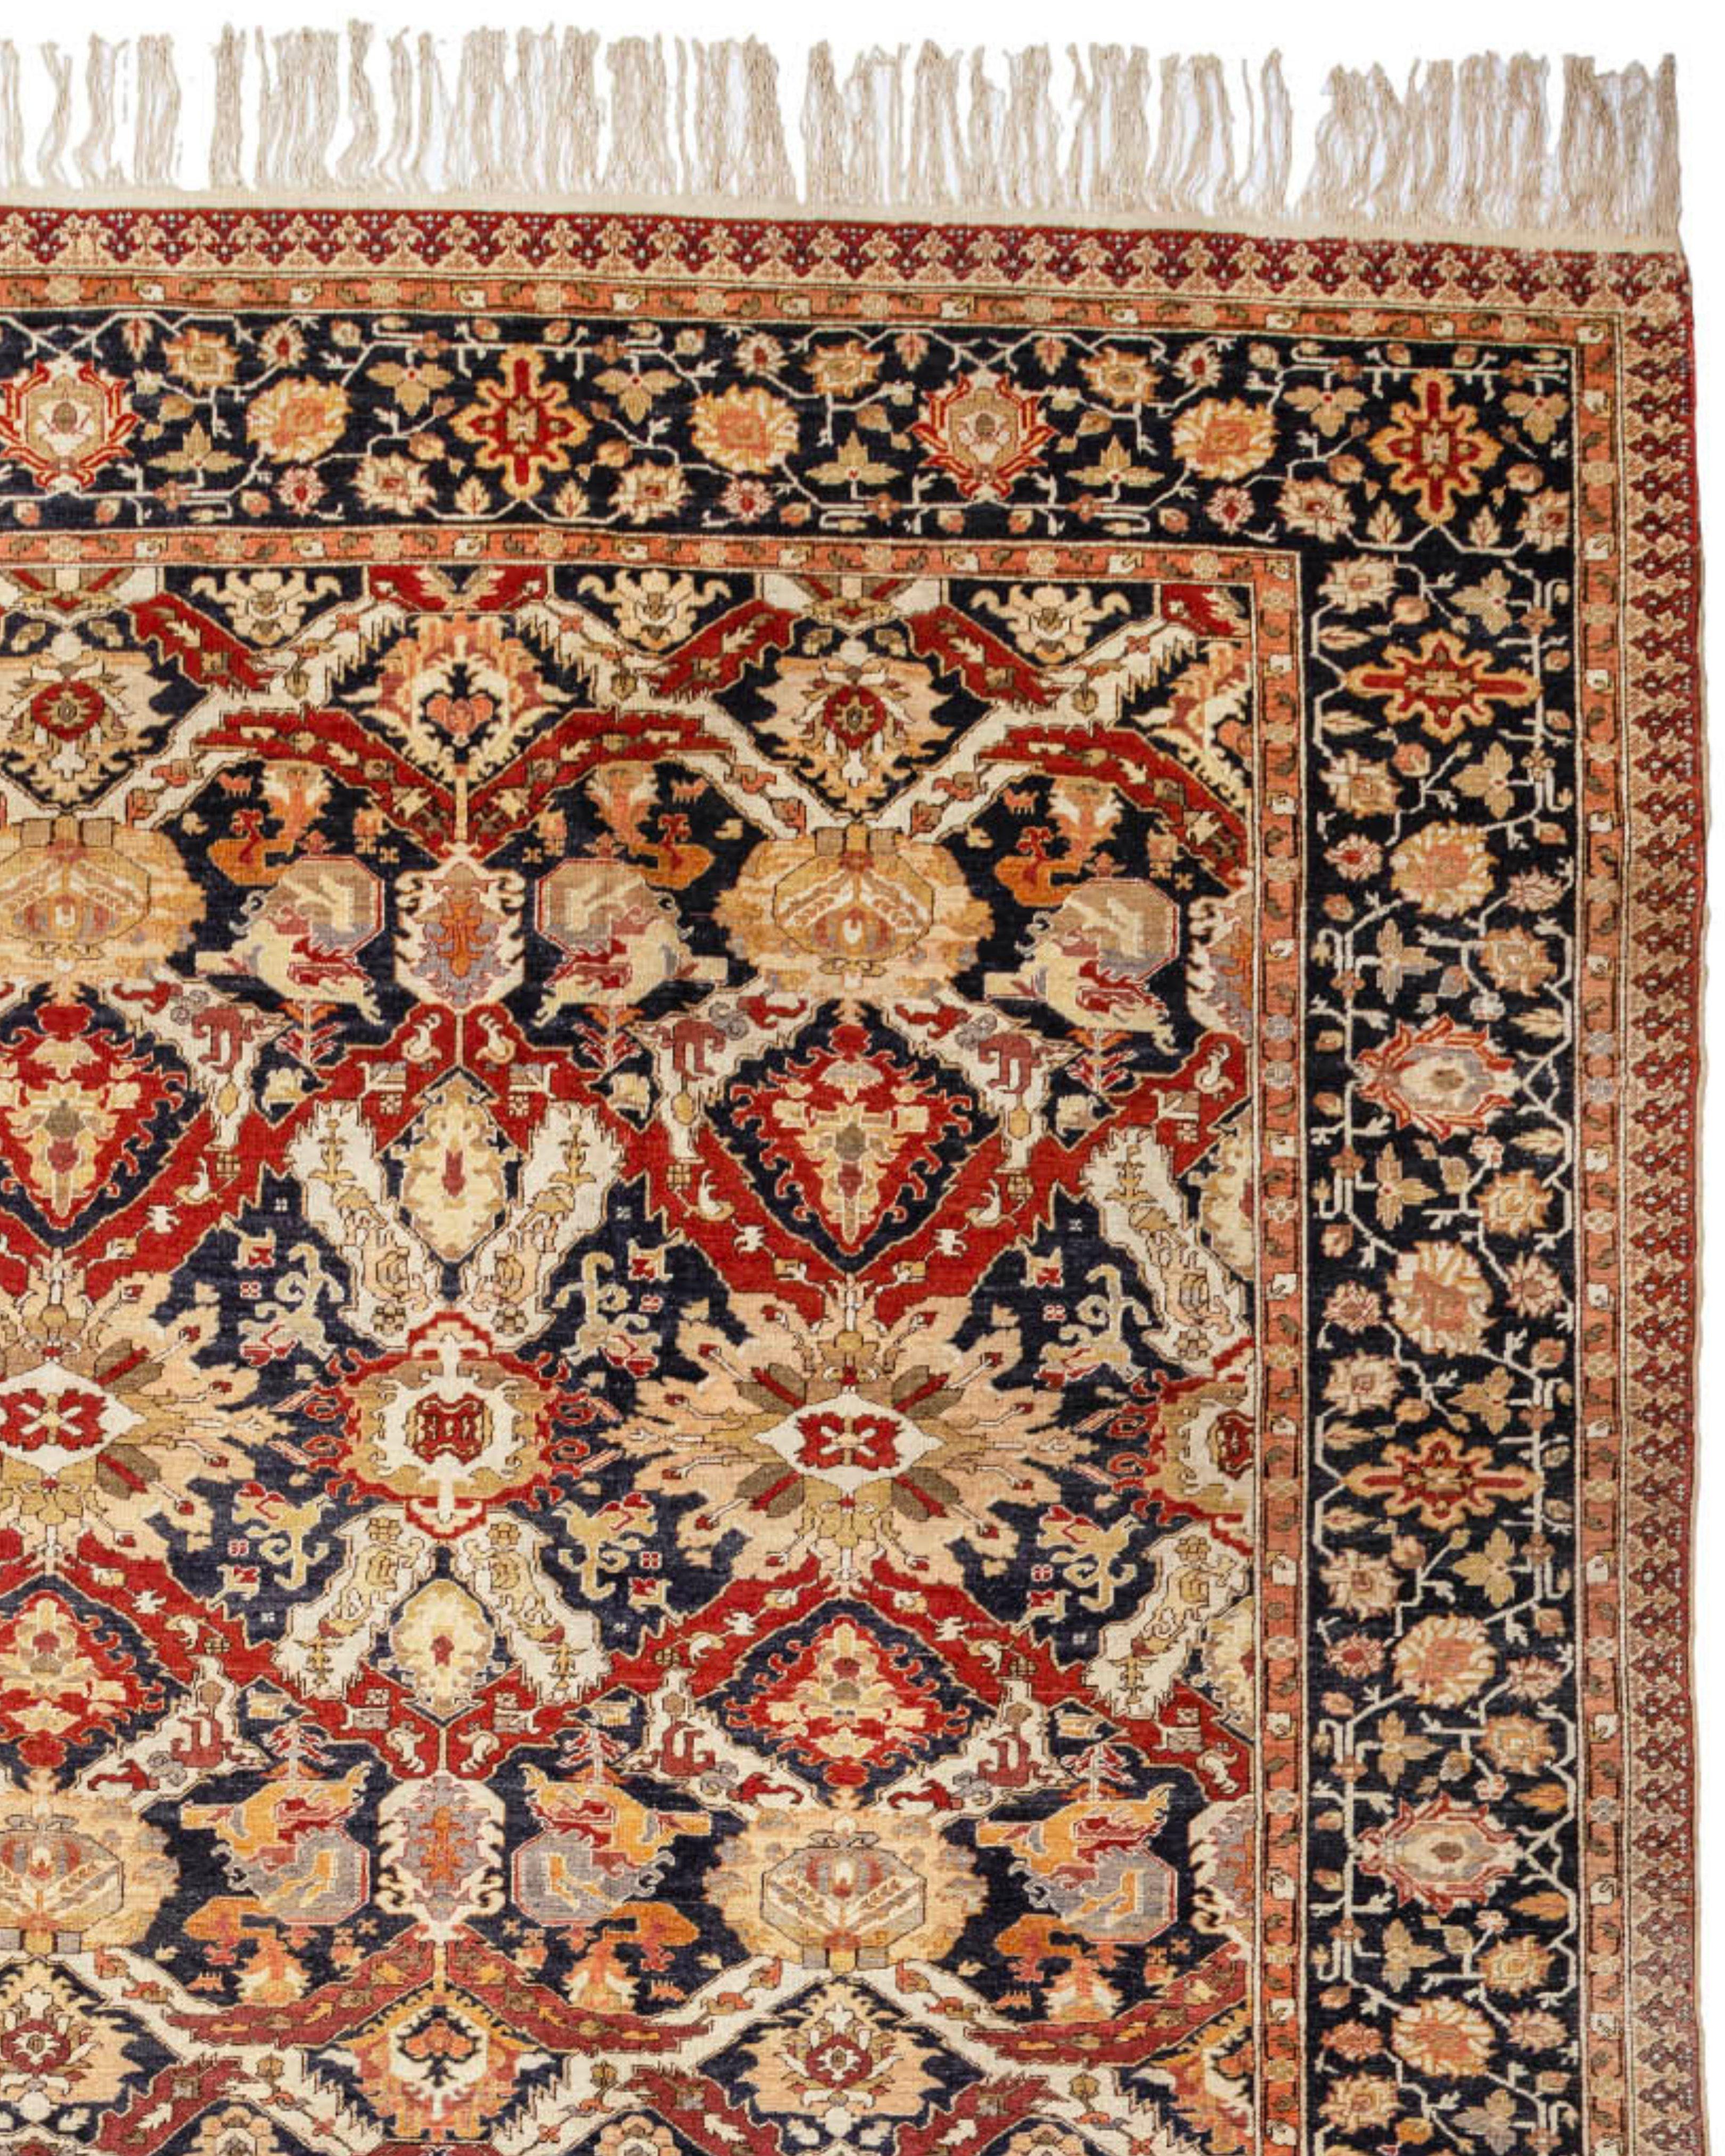 19th Century Antique Large Turkish Kayseri Carpet, c. 1900 For Sale